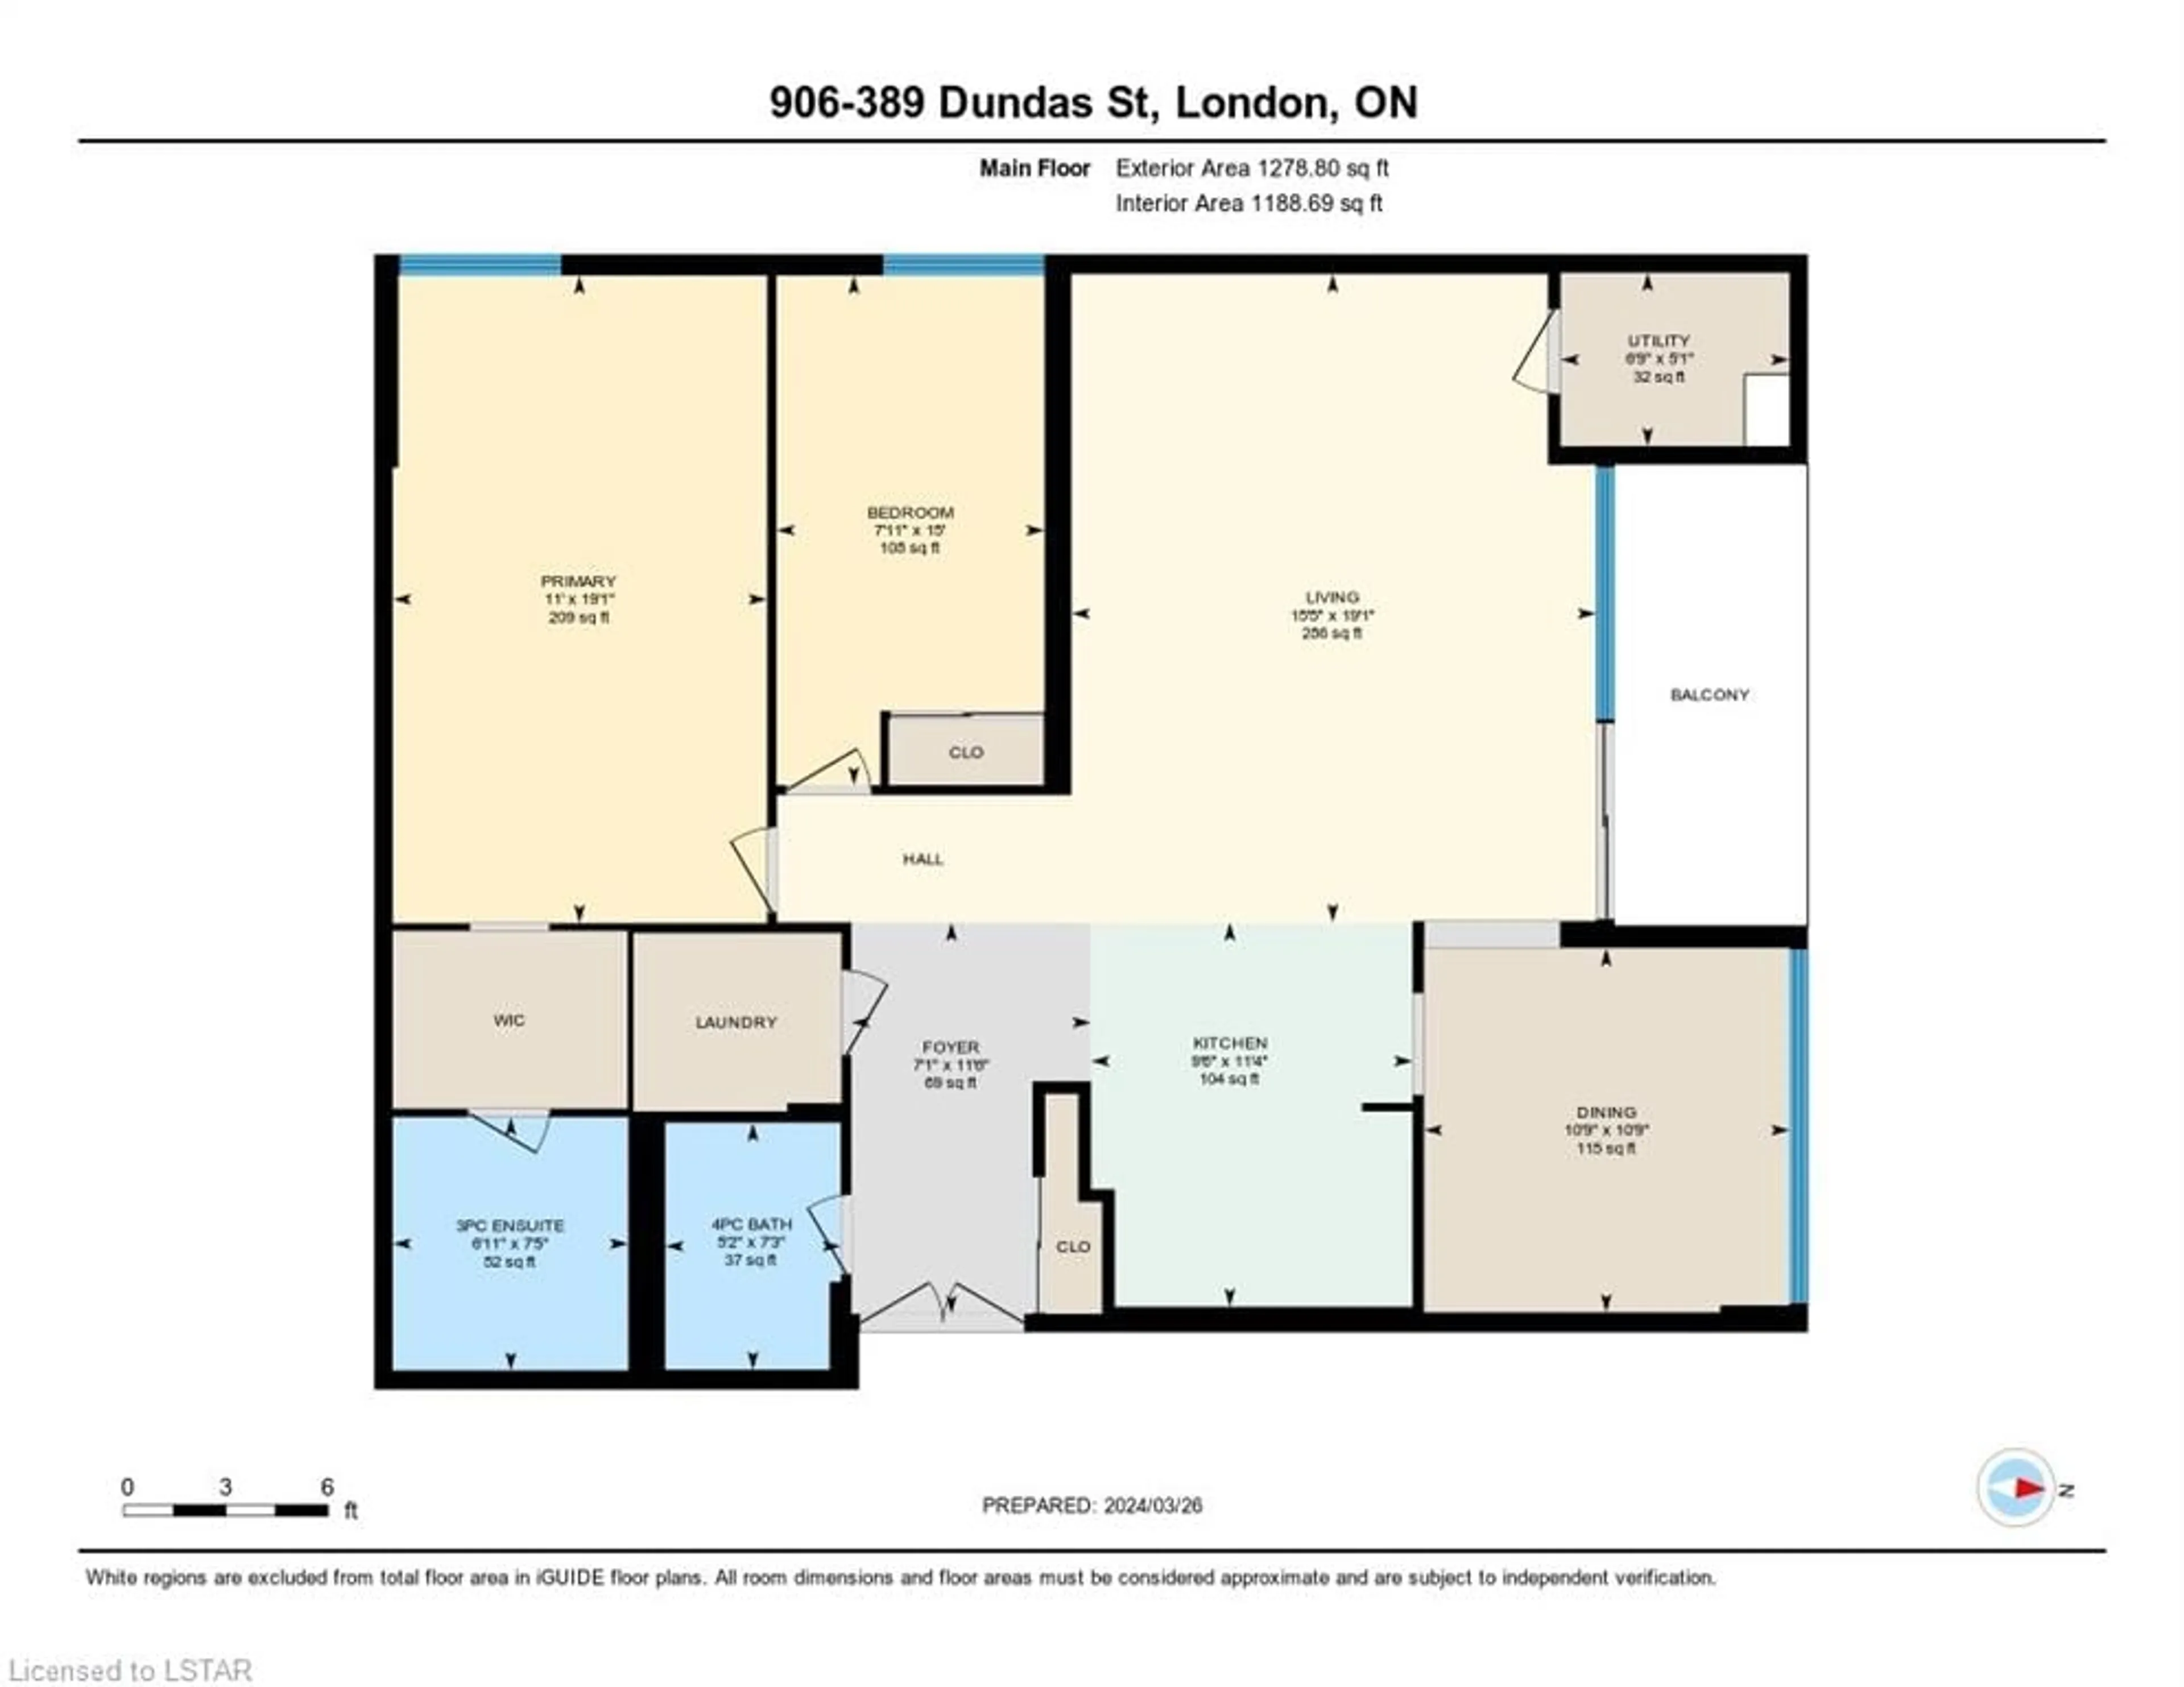 Floor plan for 389 Dundas St #906, London Ontario N6B 3L5